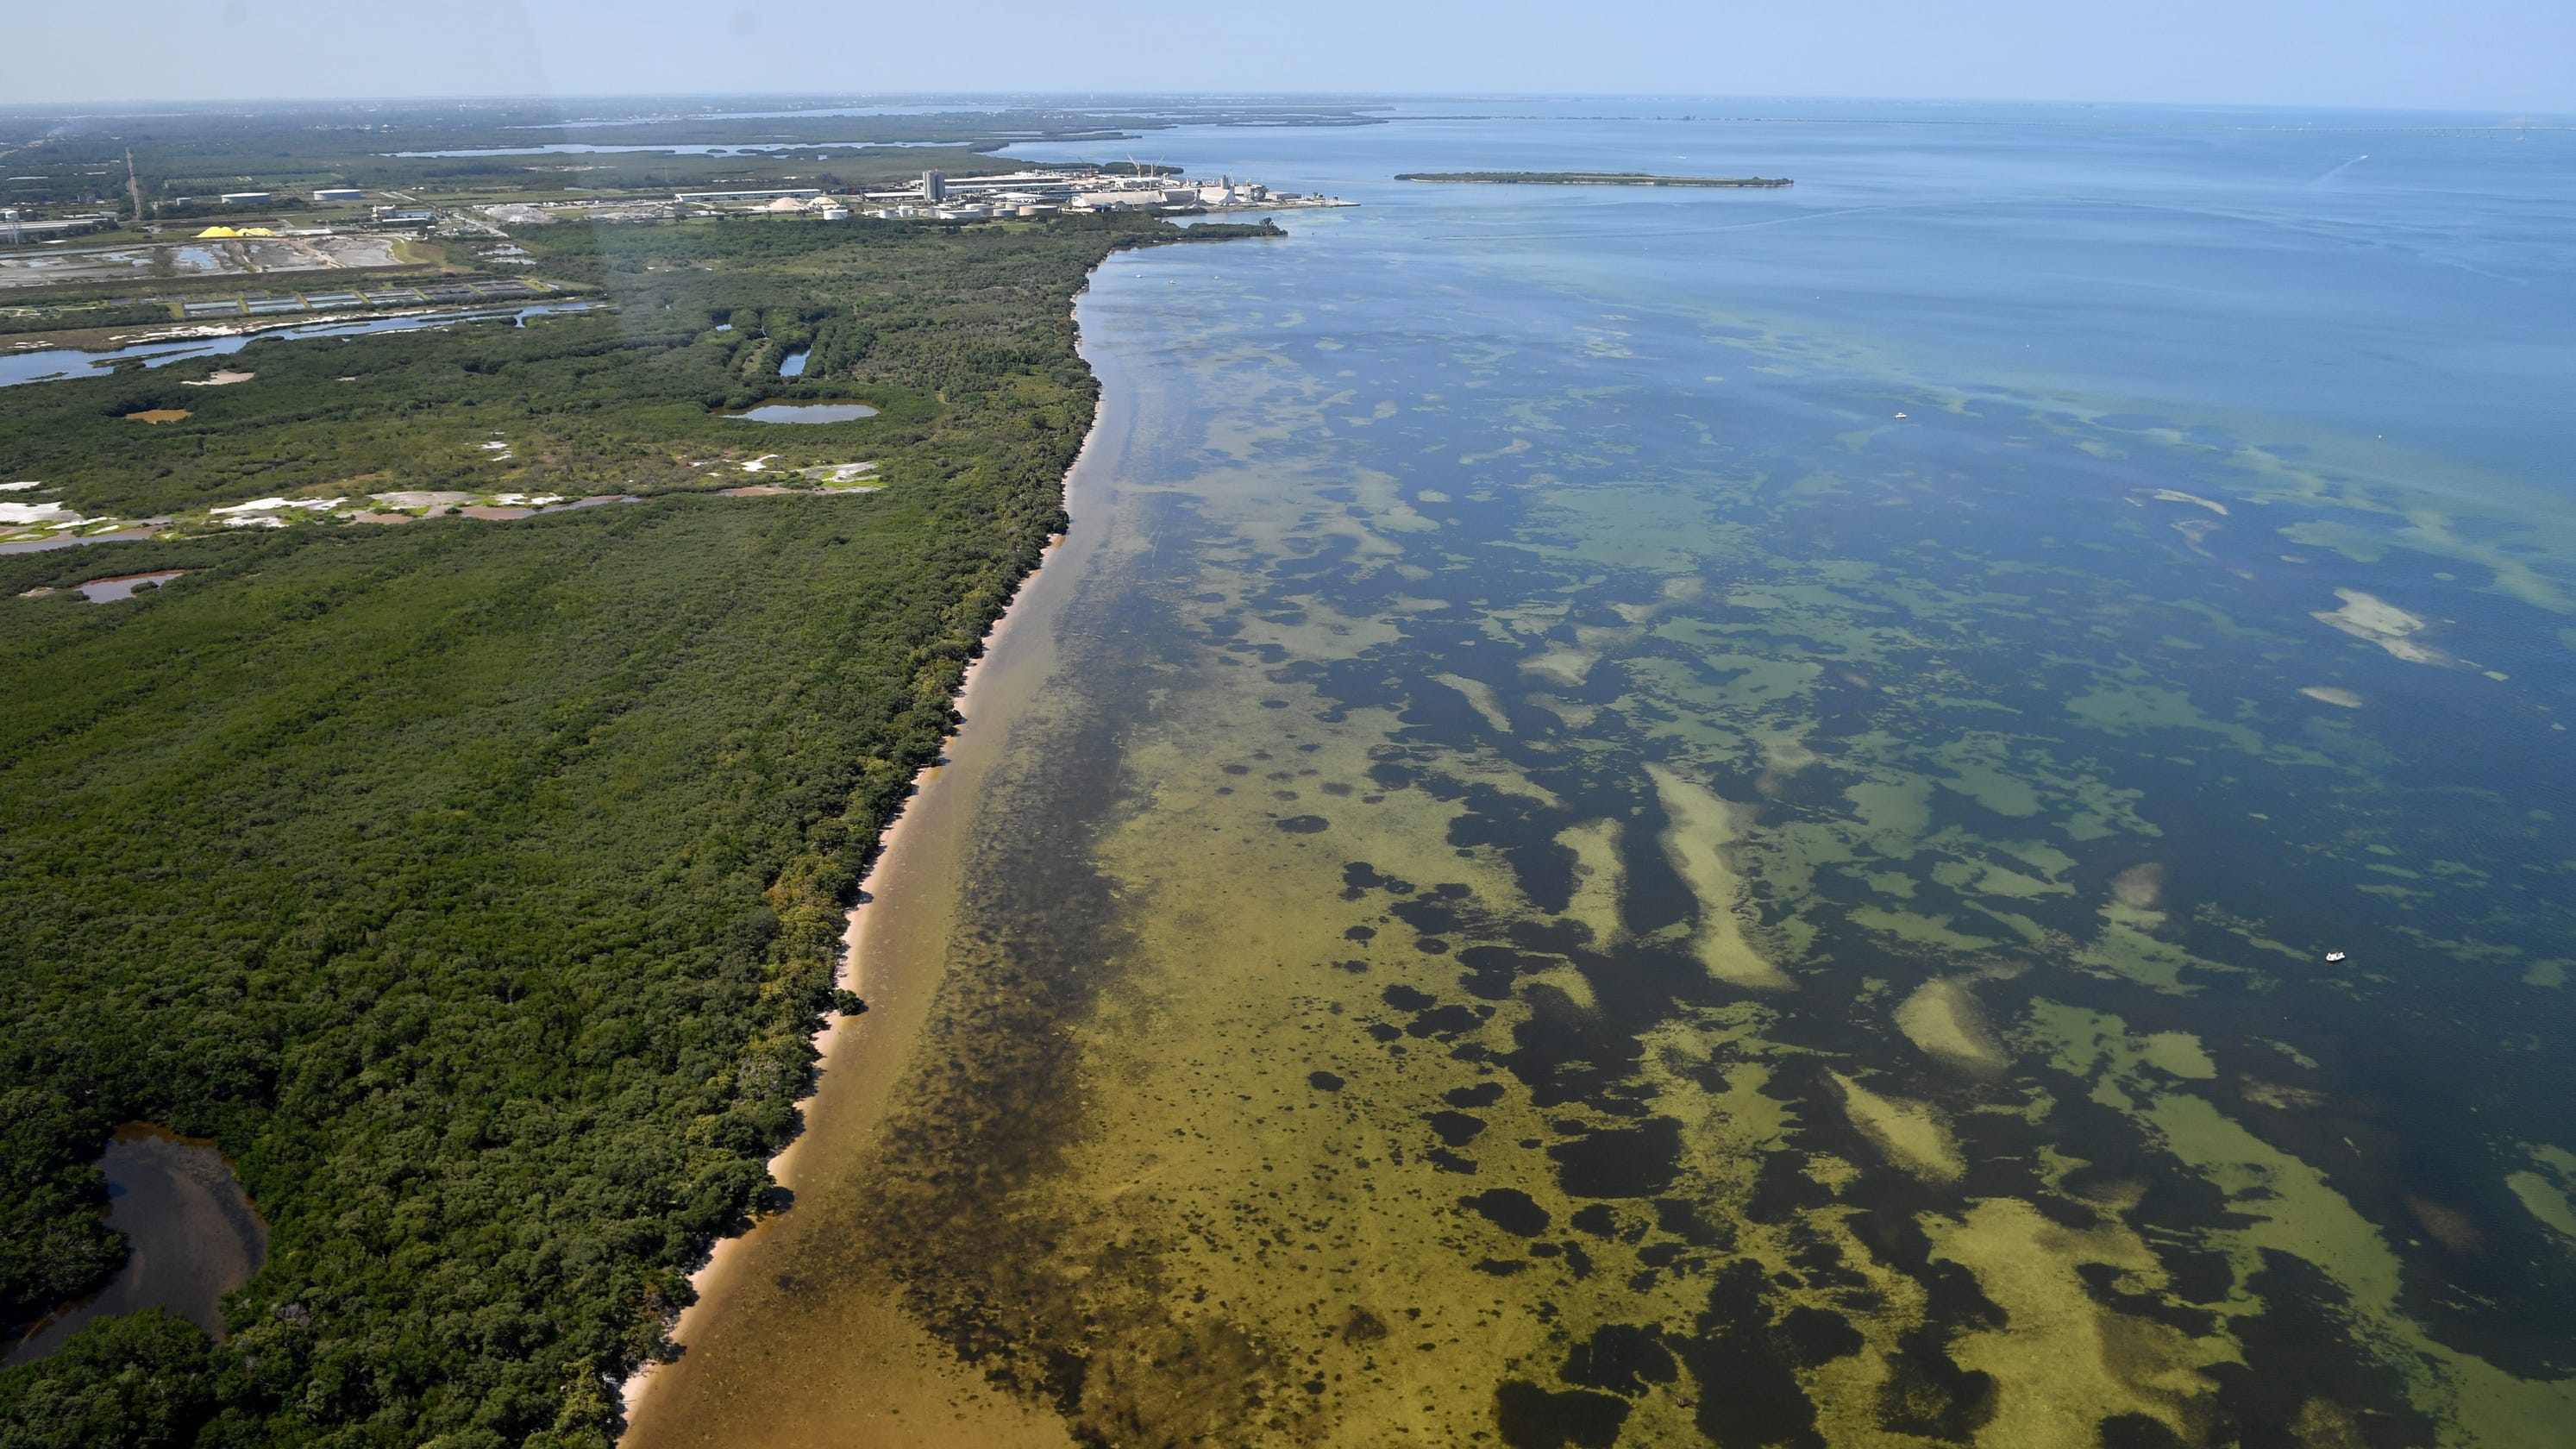 Piney Point wastewater may fuel harmful algae bloom along Florida coast, experts say